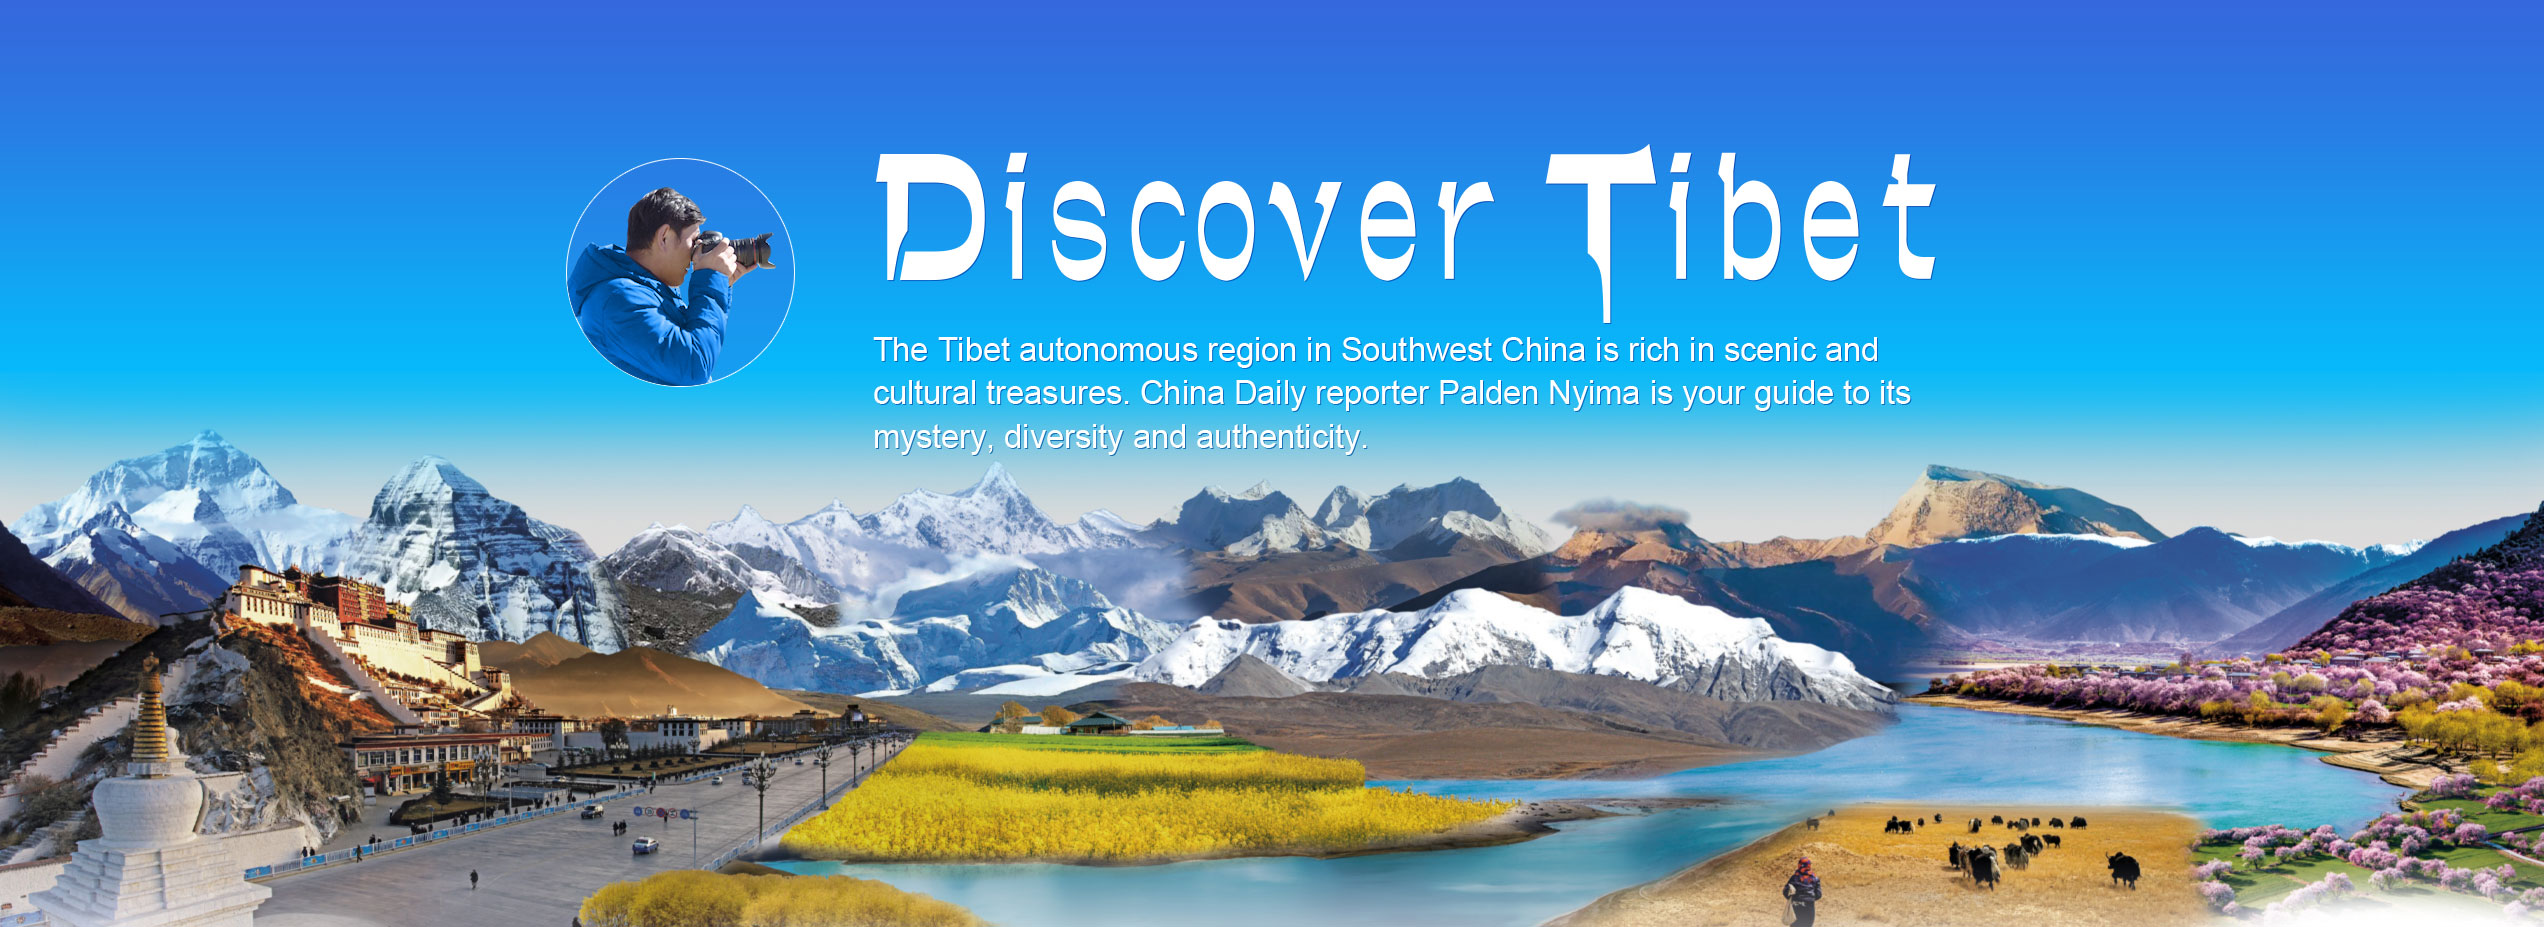 Discover Tibet